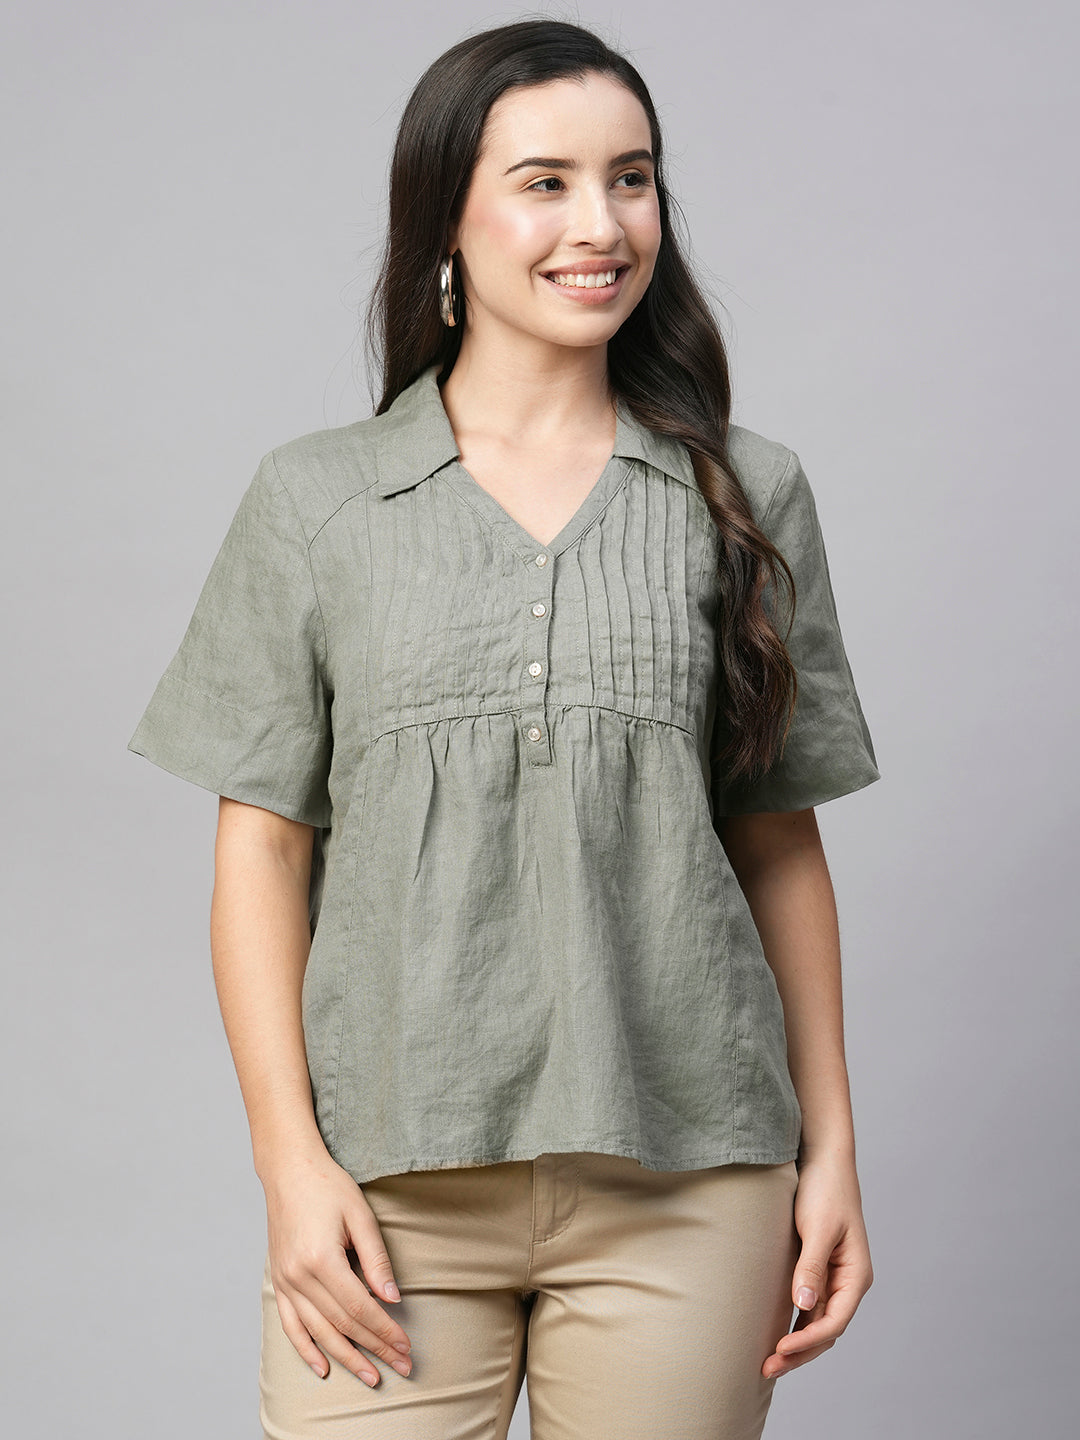 Feltree Women's Short Sleeve Cotton Linen Blouses Top T-shirt, Ladies Solid  Color Cotton and Linen Shirt Short Sleeve Lapel Button Top White XL 